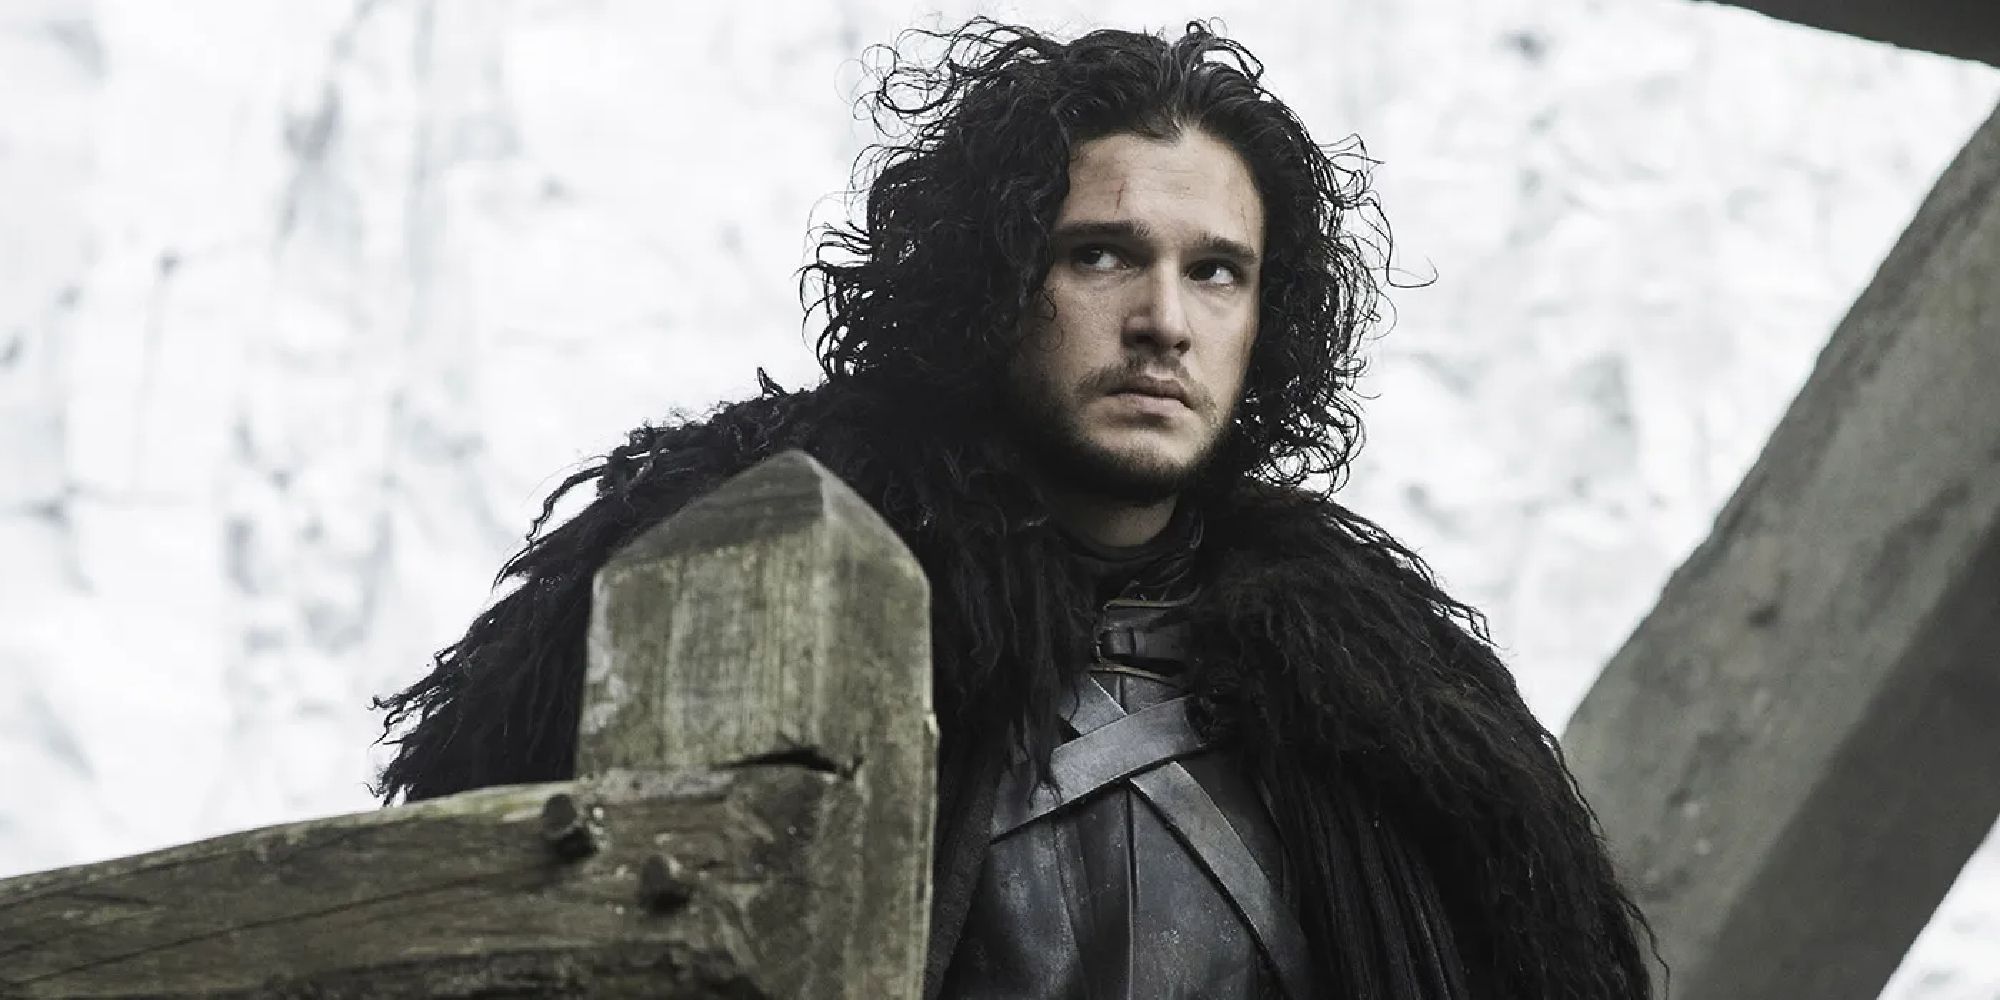 Jon Snow in his Night's Watch attire in Season 6 of Game of Thrones